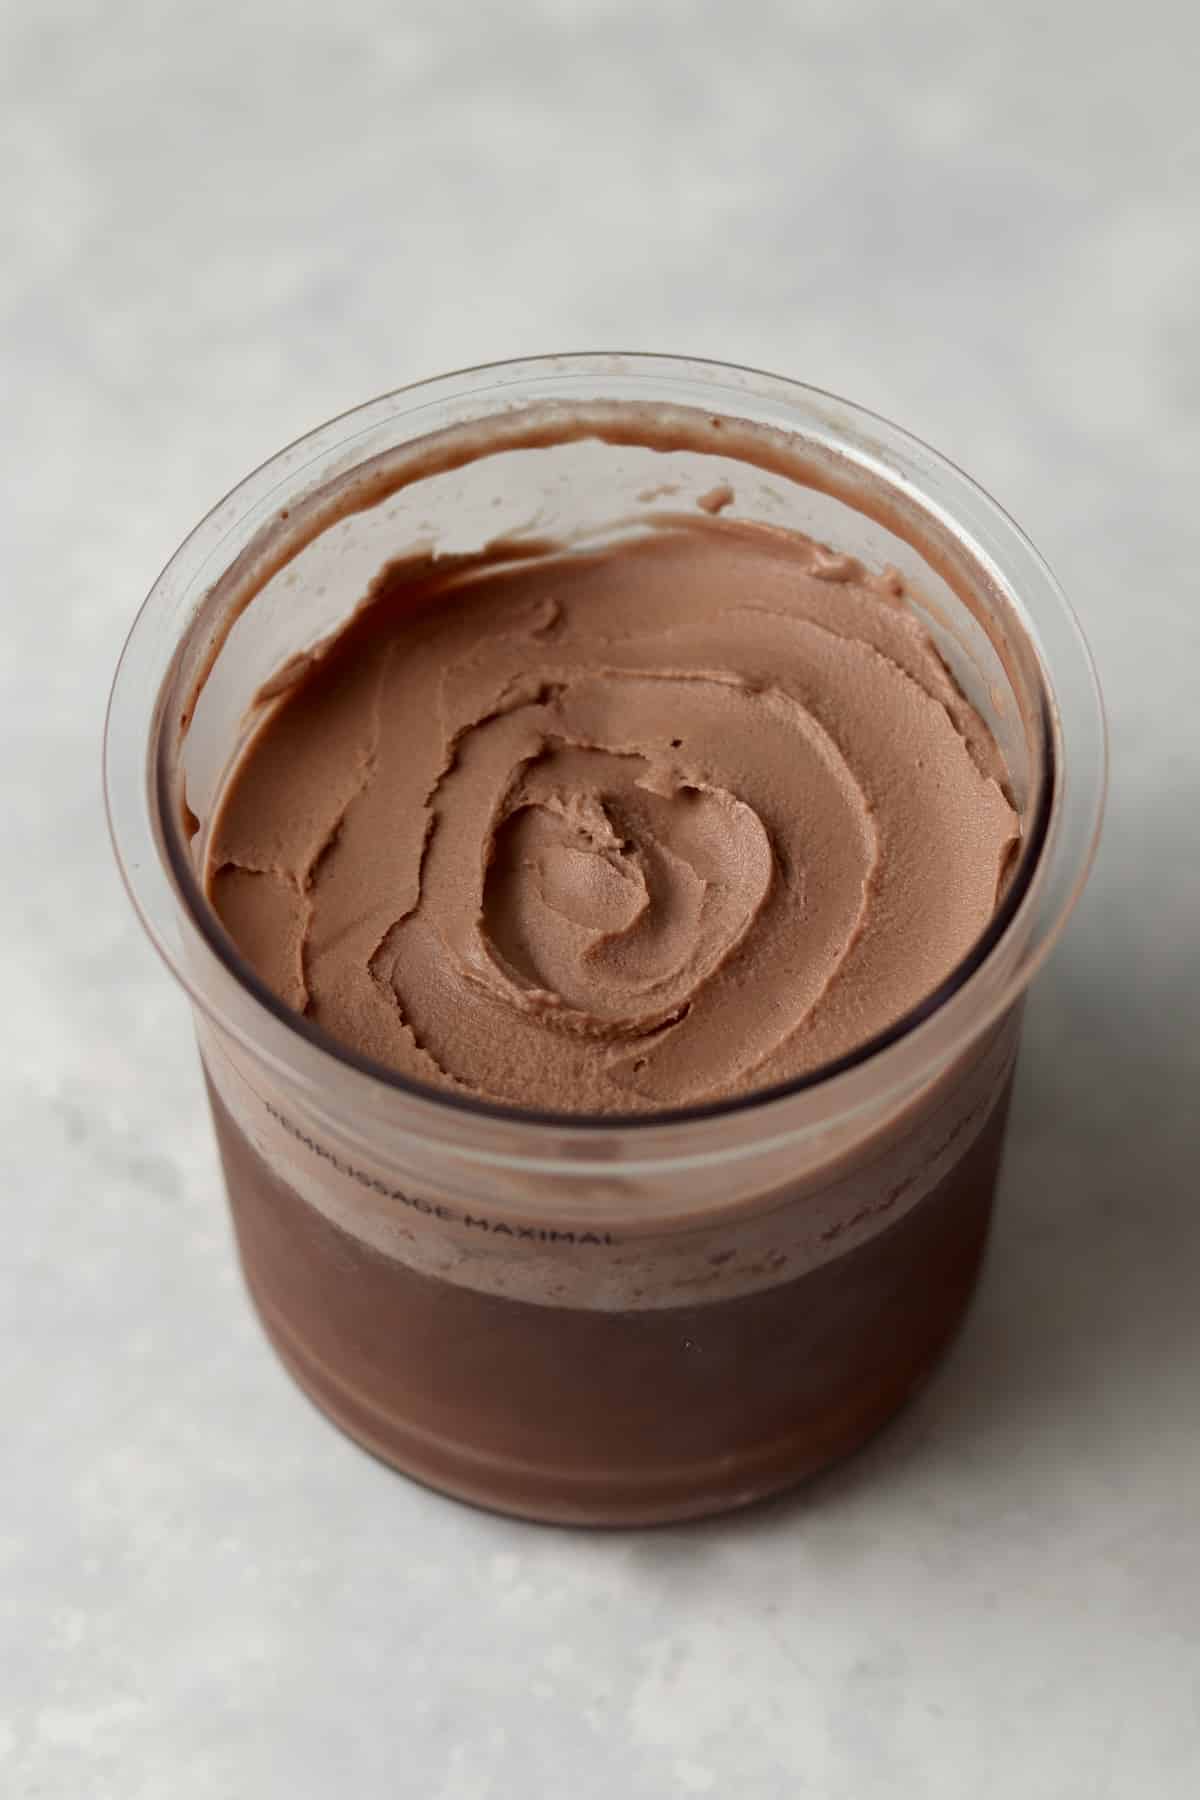 Creamy chocolate soft serve ice cream in a Ninja Creami plastic pint container.